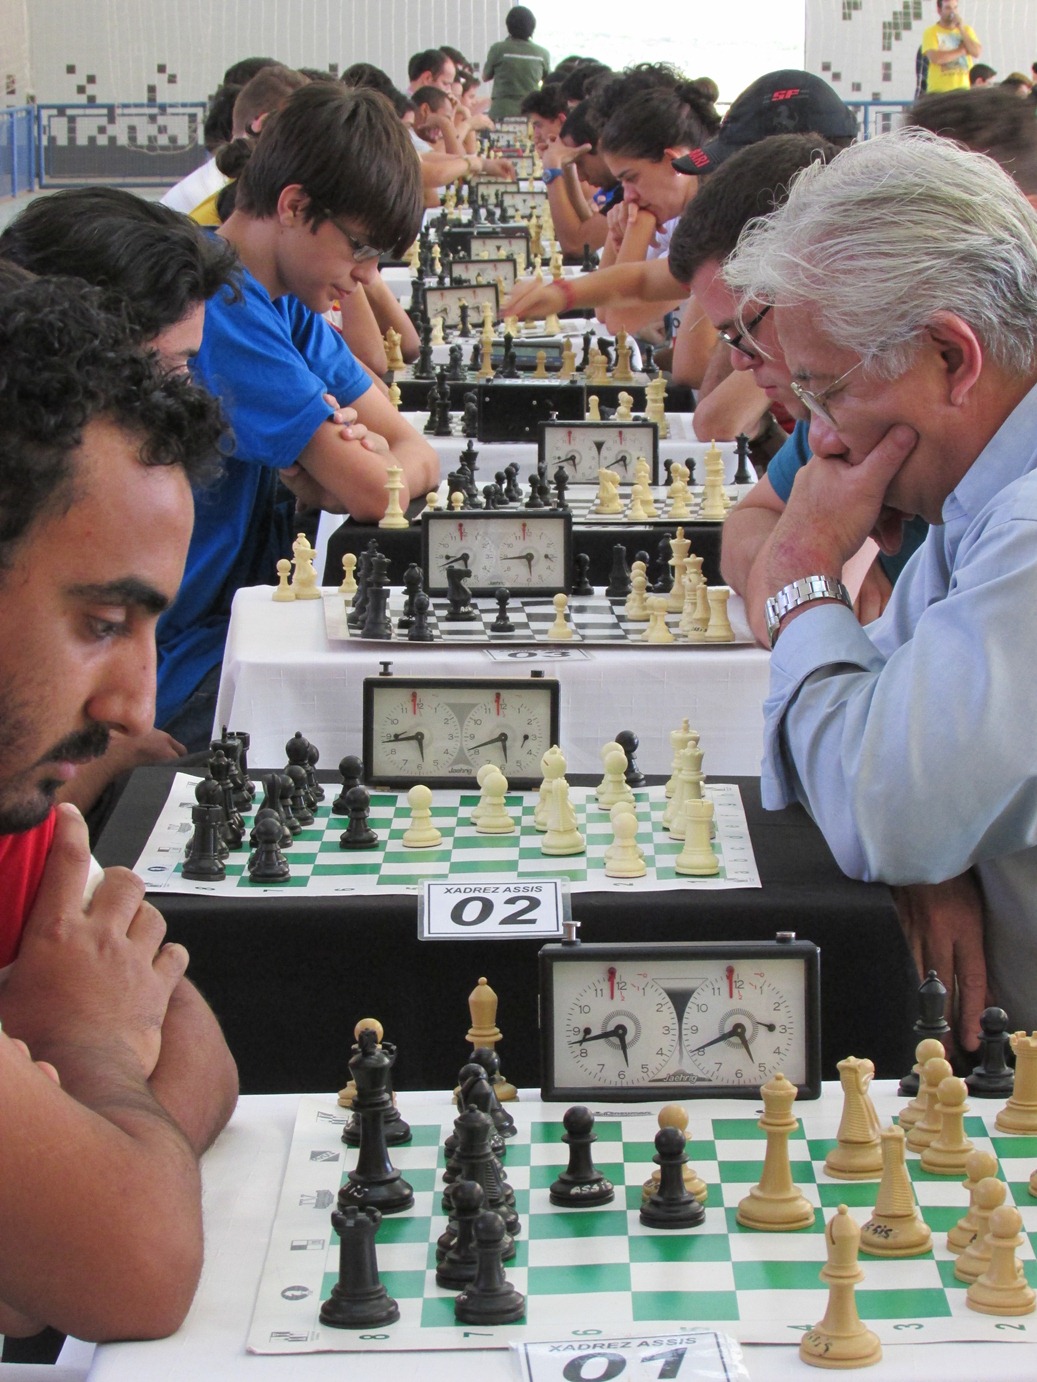 Relógio para xadrez jaehrig em São Paulo